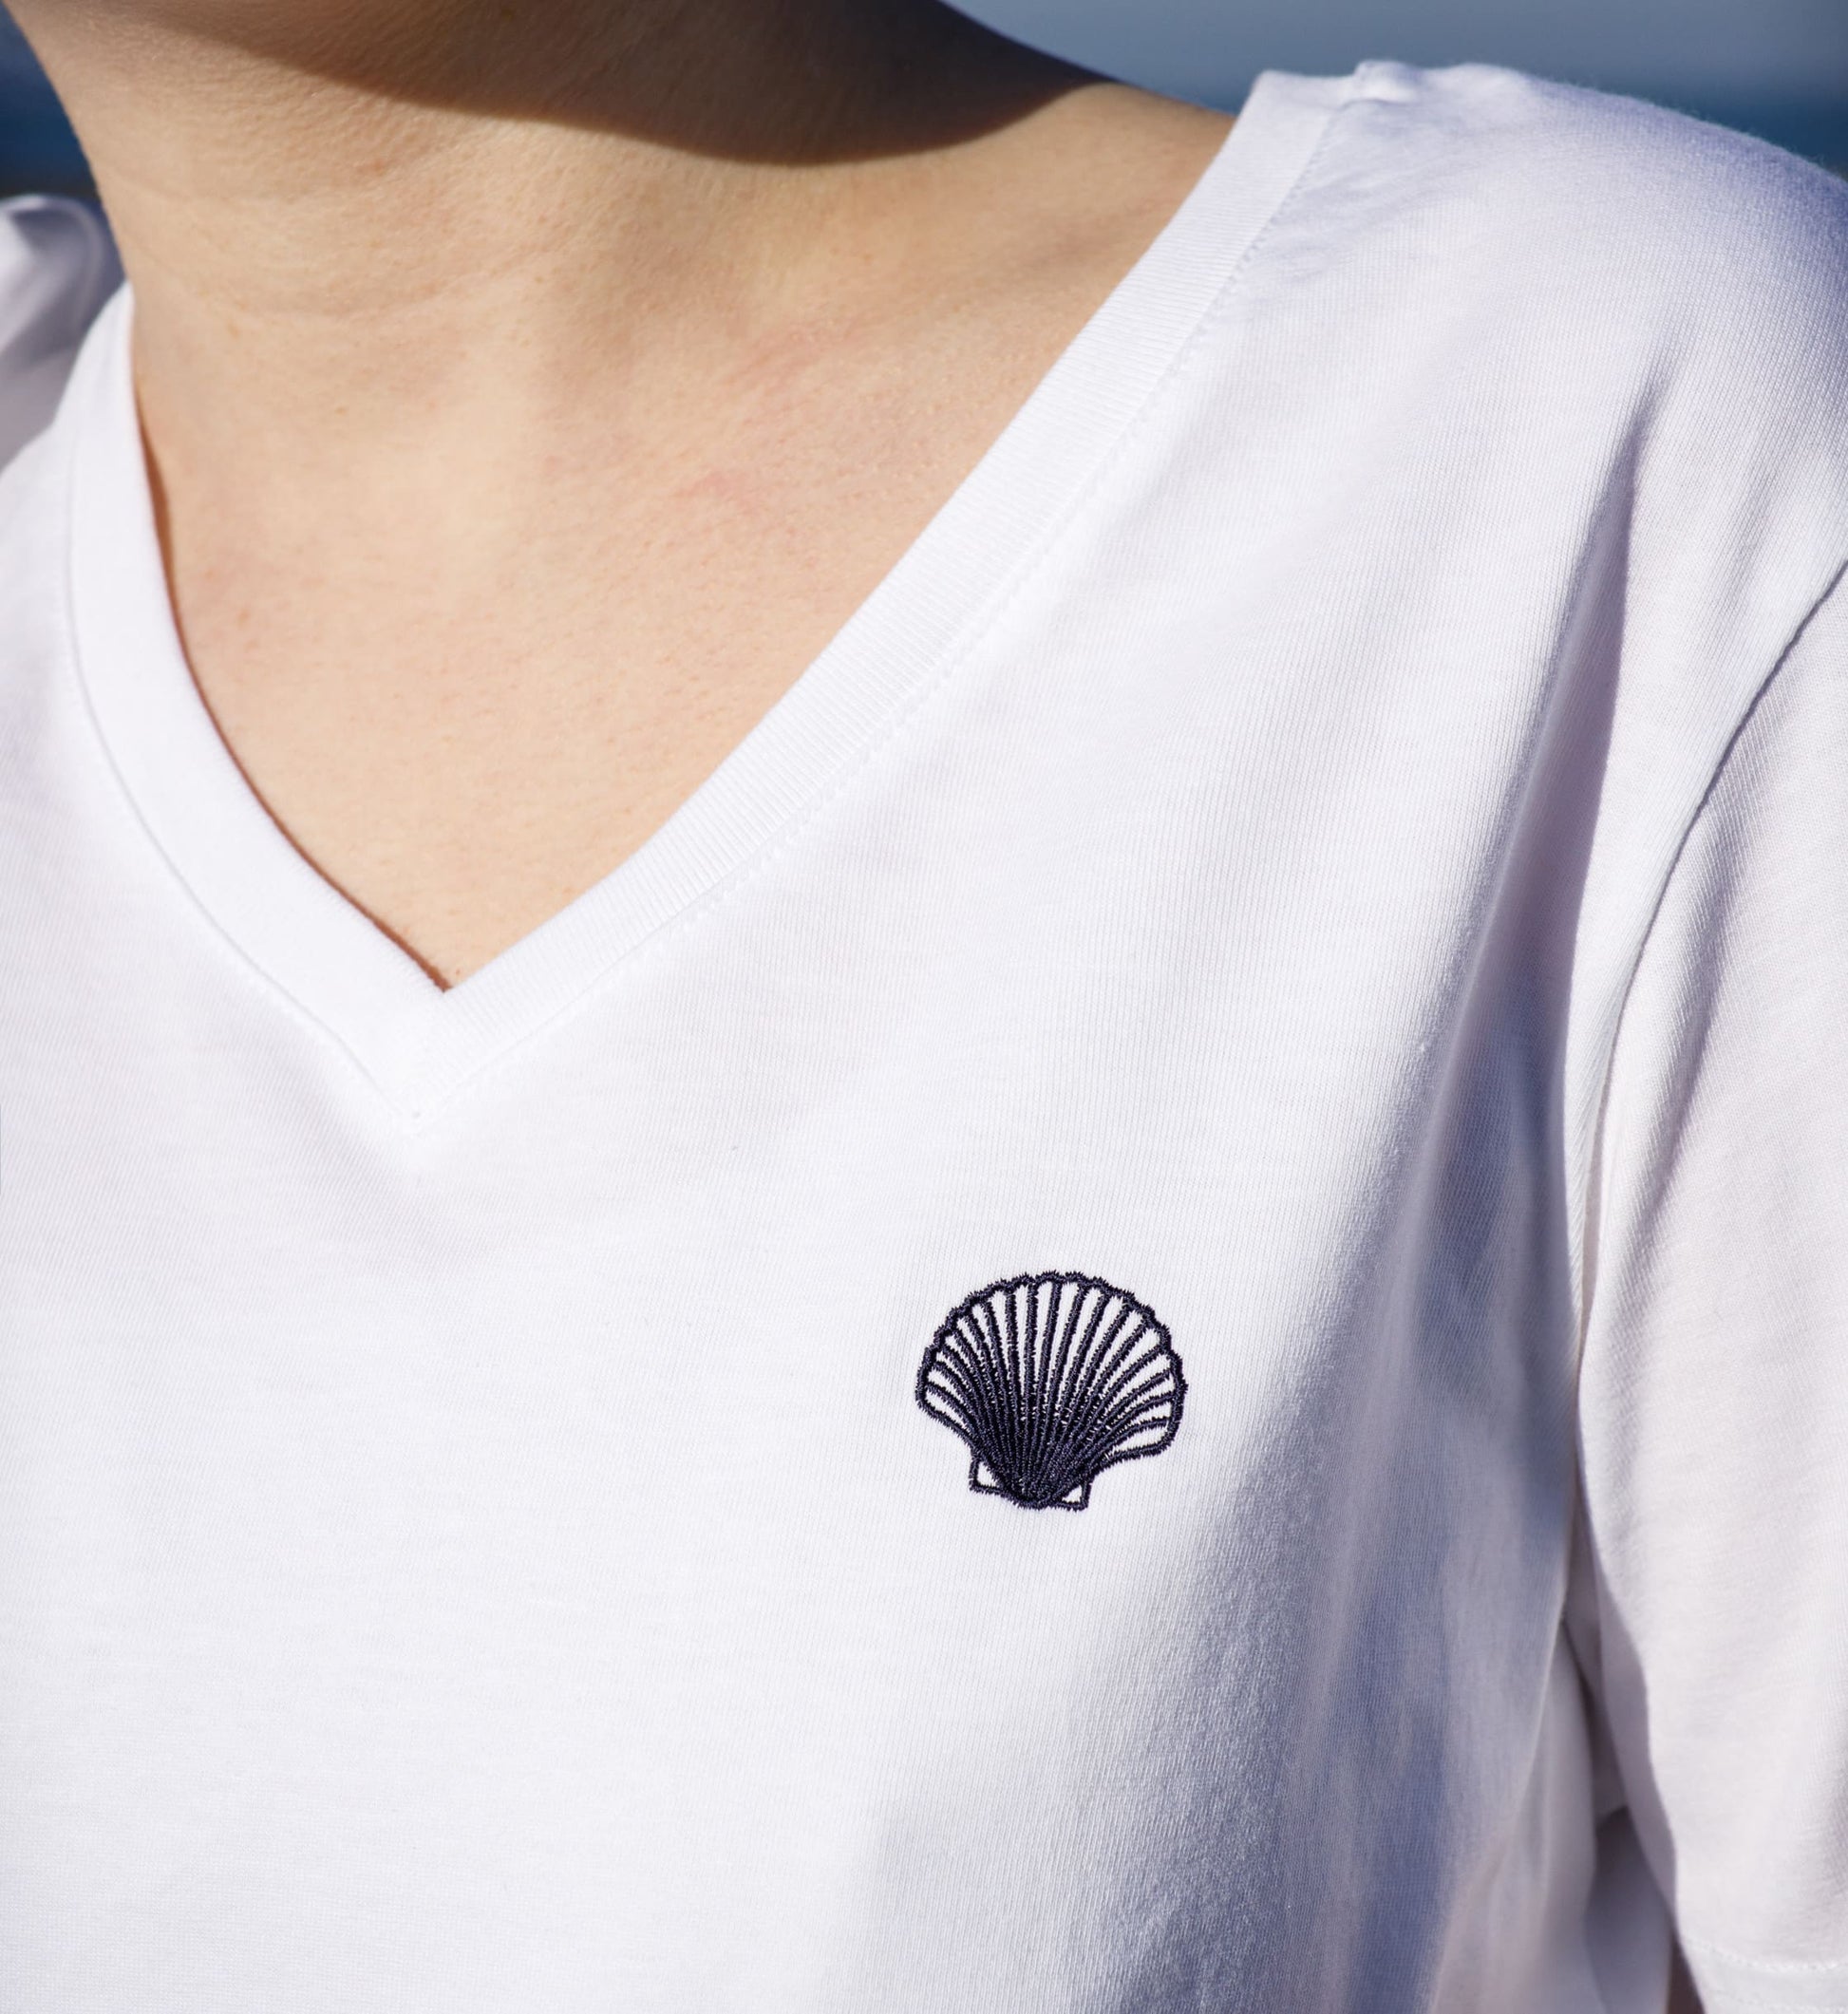 Short-sleeved v-neck t-shirt in organic cotton